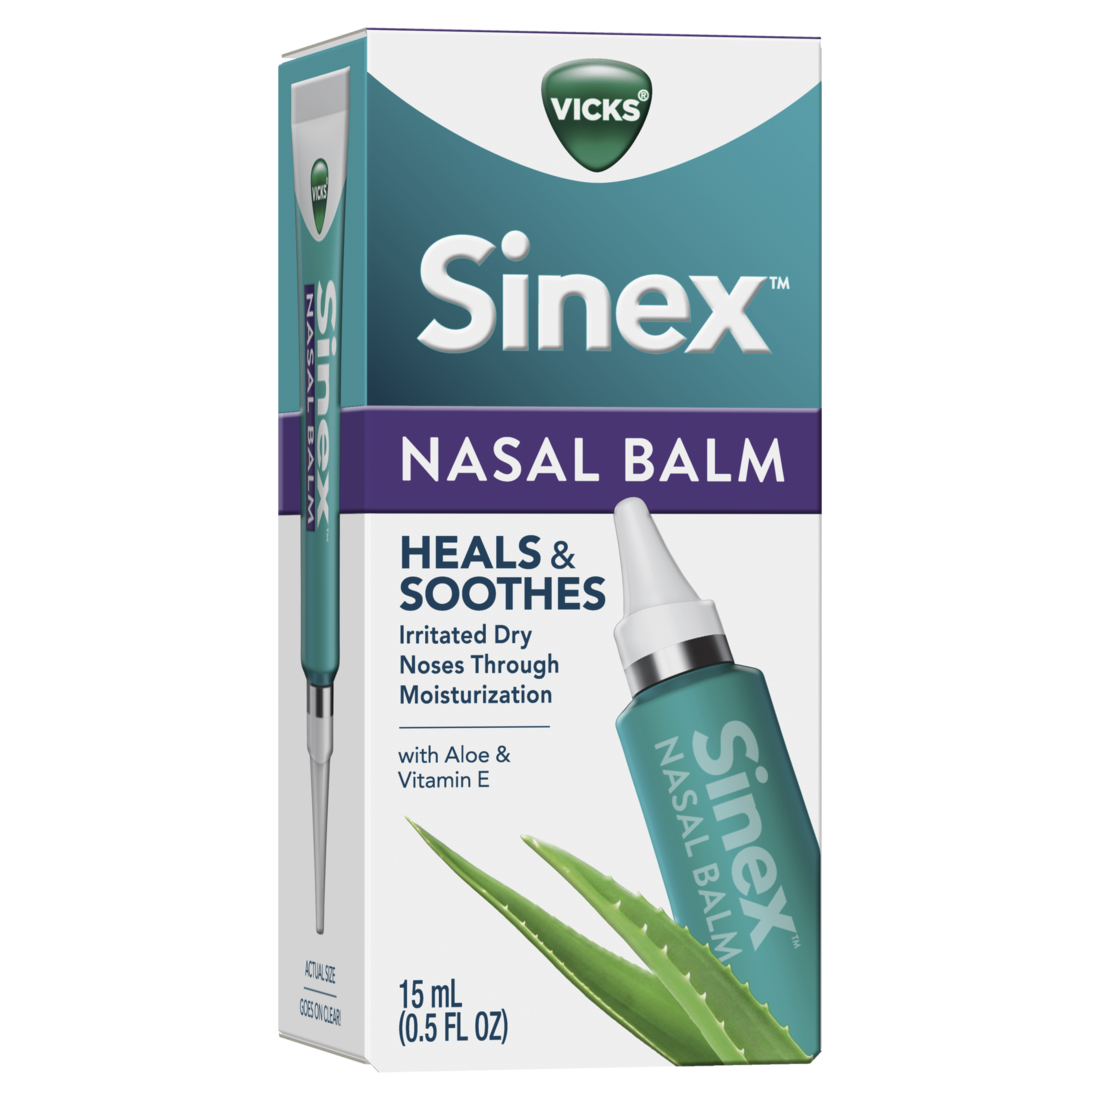 Vicks® Sinex™ Nasal Balm 0.5 FL OZ left